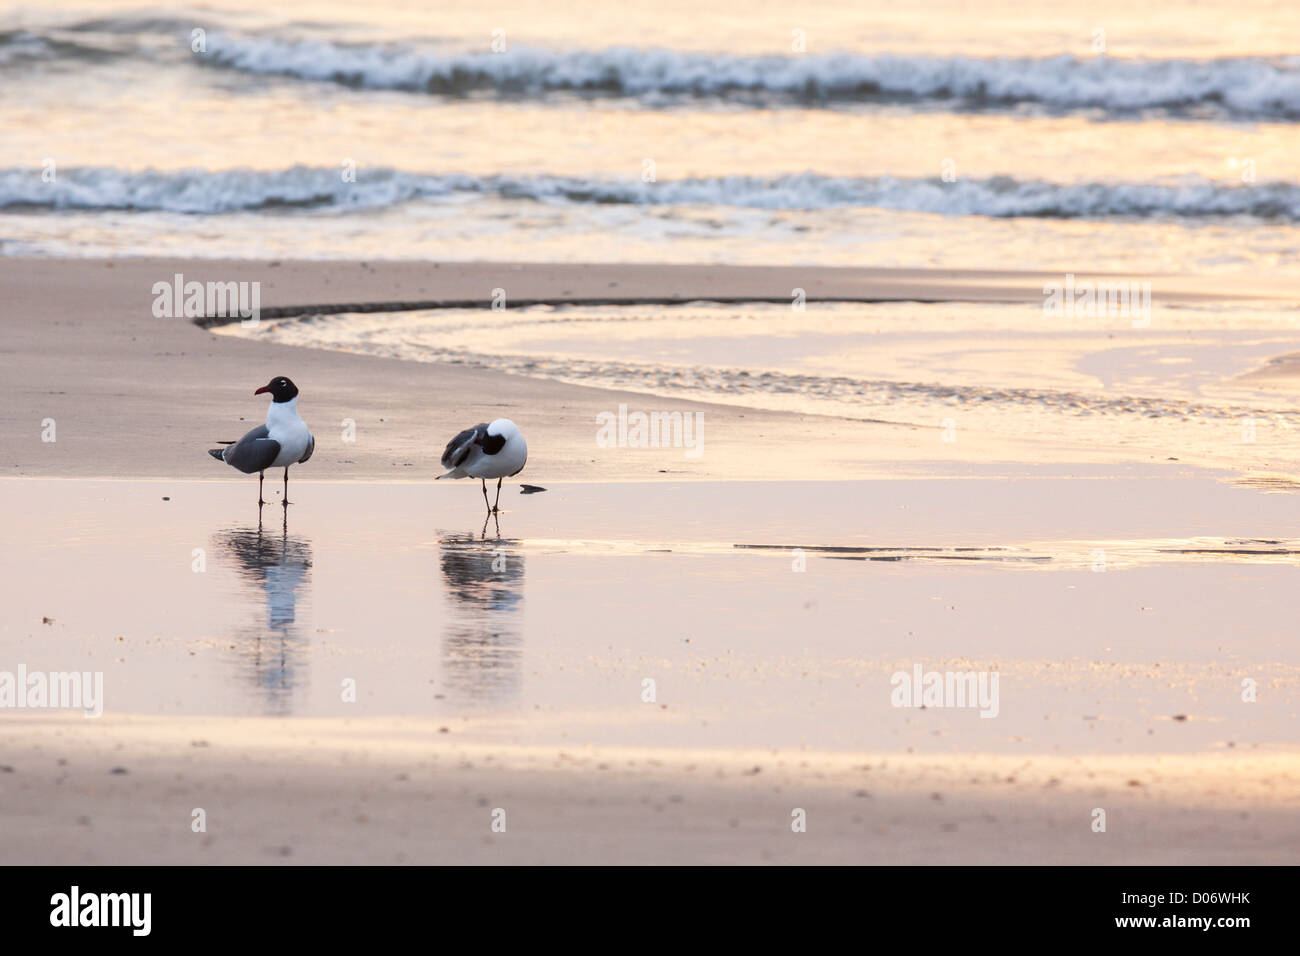 Two sea gulls on beach at sunrise in Amelia Island, Florida Stock Photo